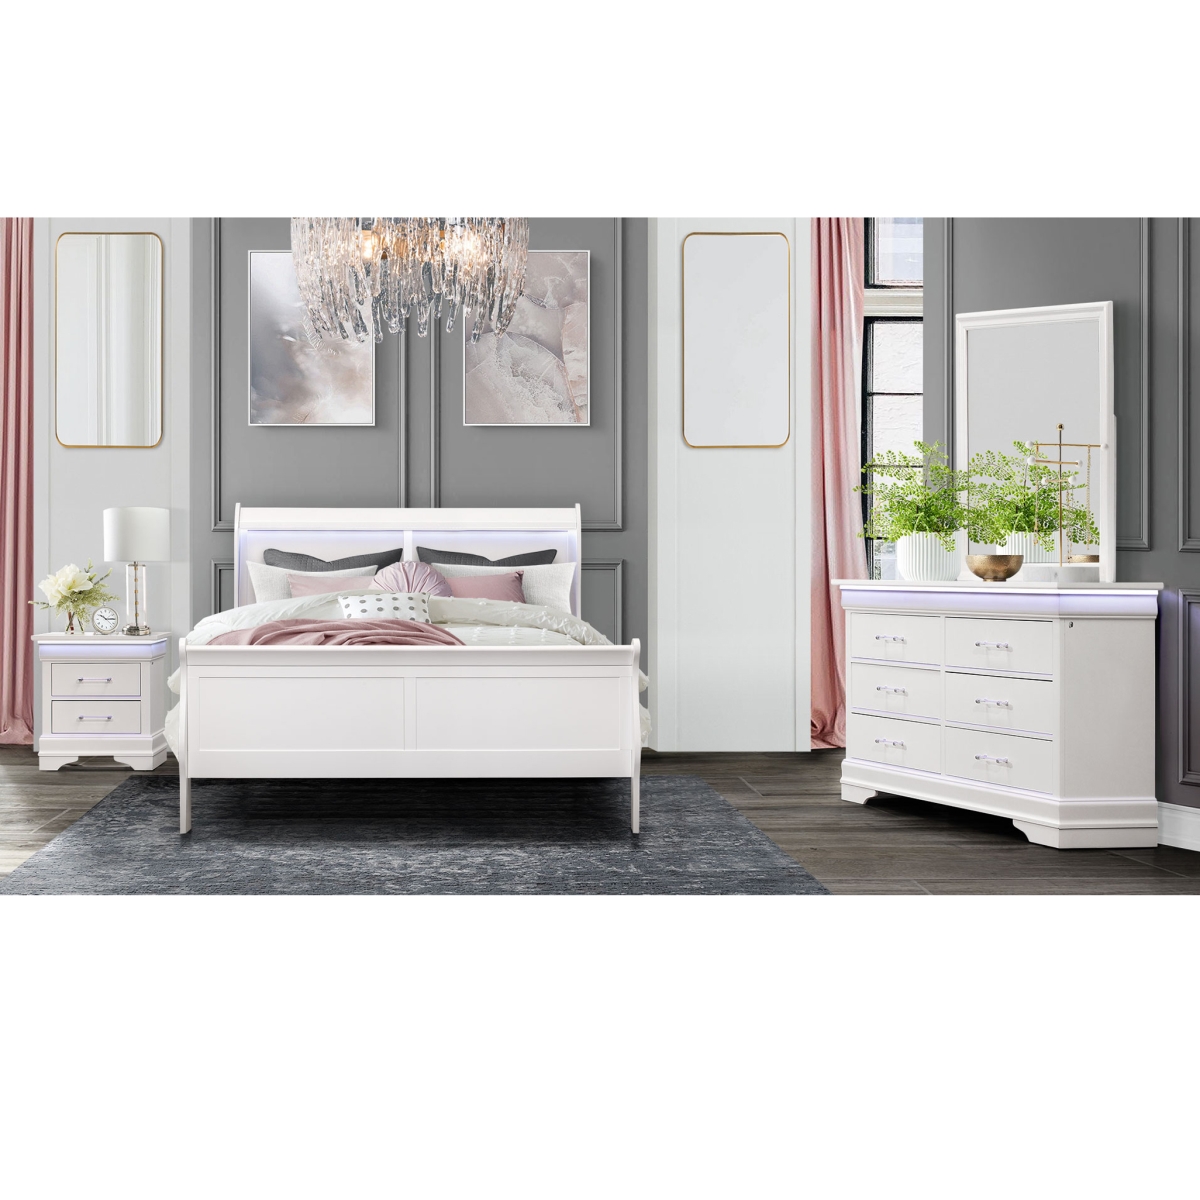 CHARLIE-WHITE-KB Charlie Bed, White - King Size -  Global Furniture USA